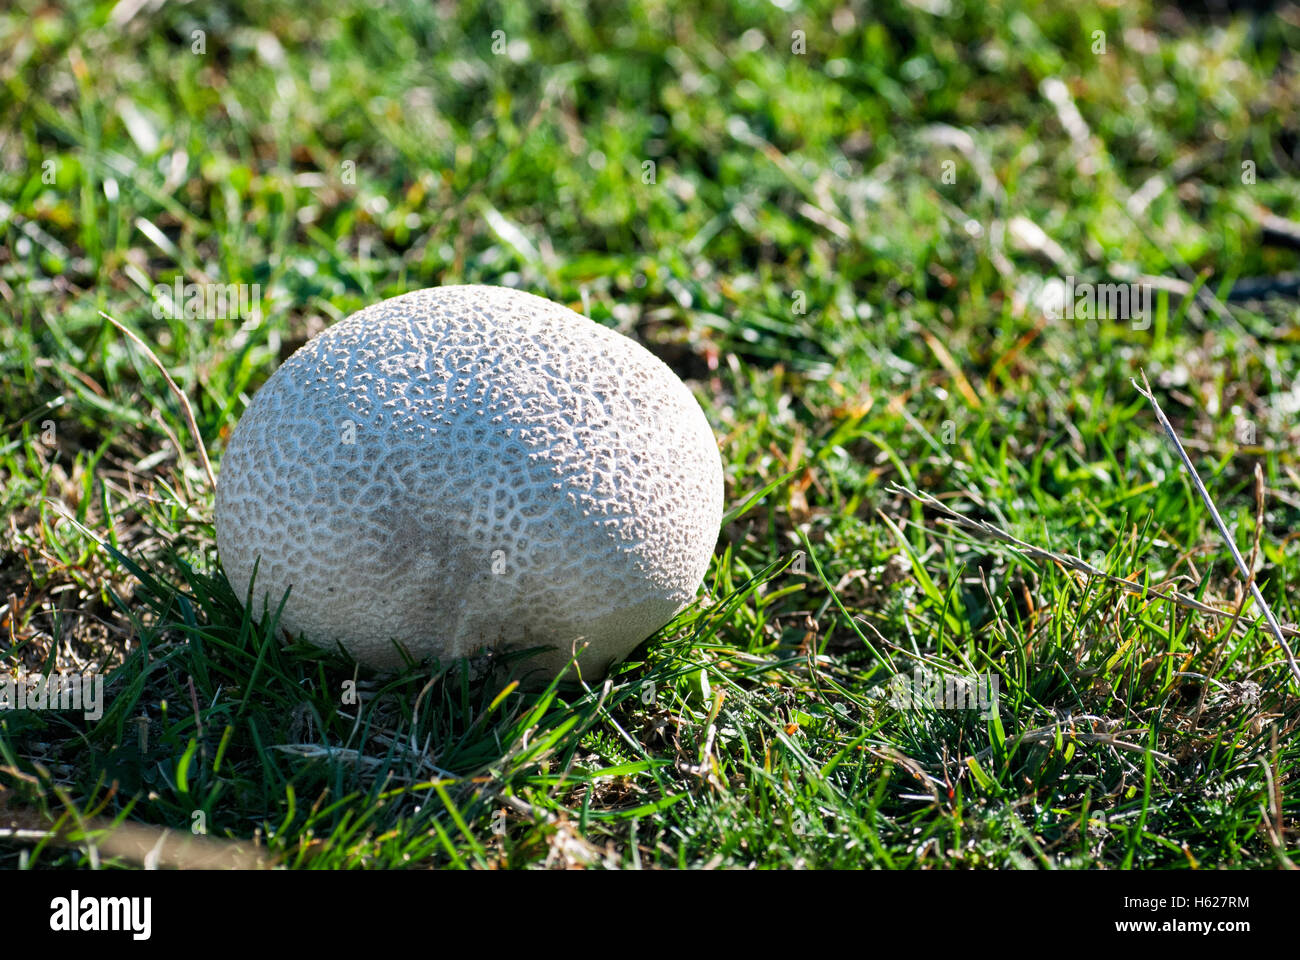 Fresh mushroom growing in the grass Stock Photo